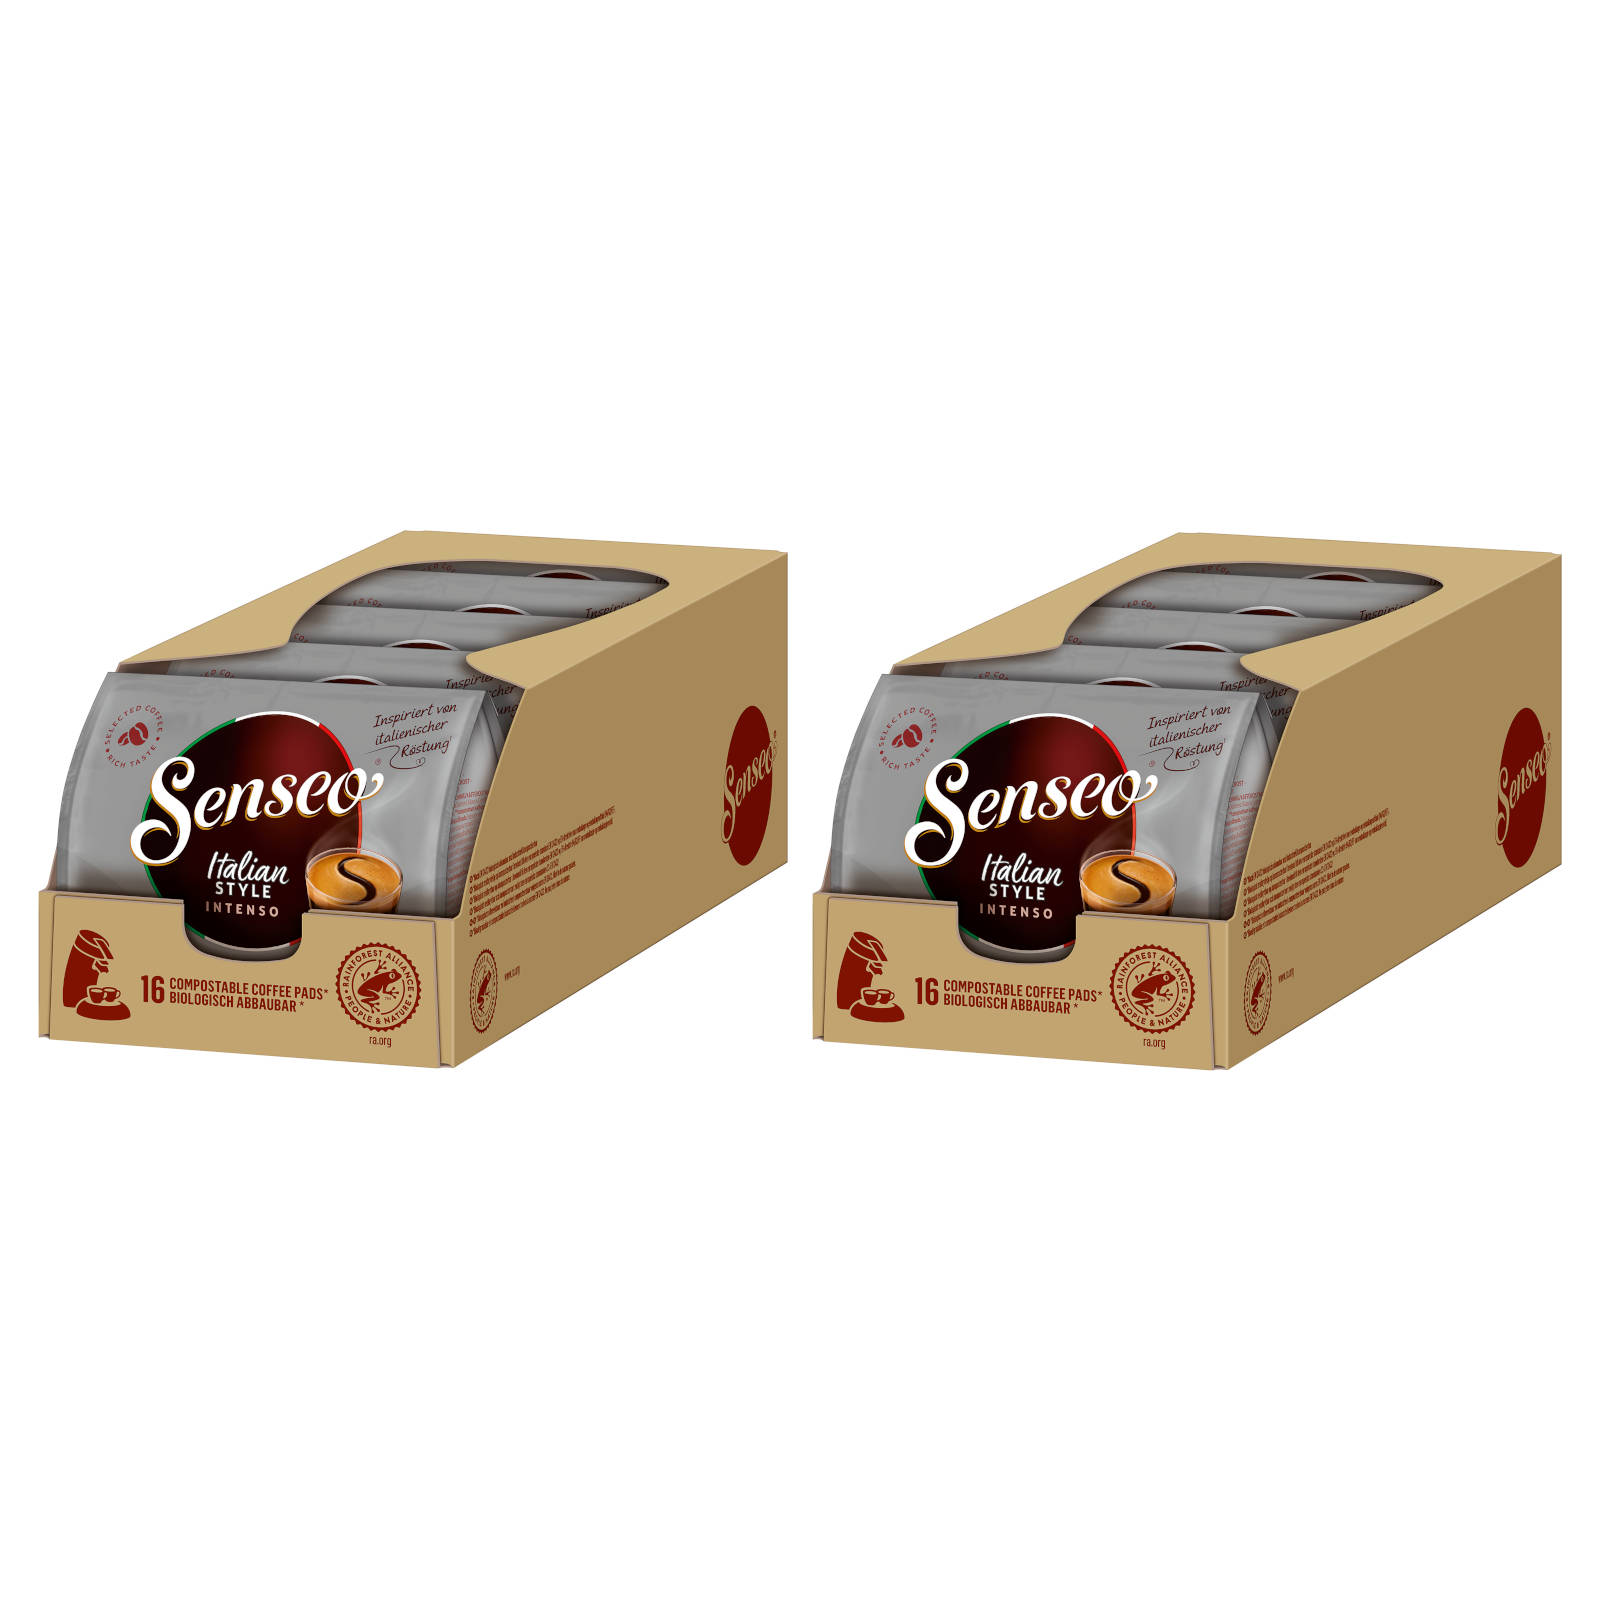 Soft- Getränke Intenso 160 Kaffeepads SENSEO (Senseo Italian Pad-Maschine) Style